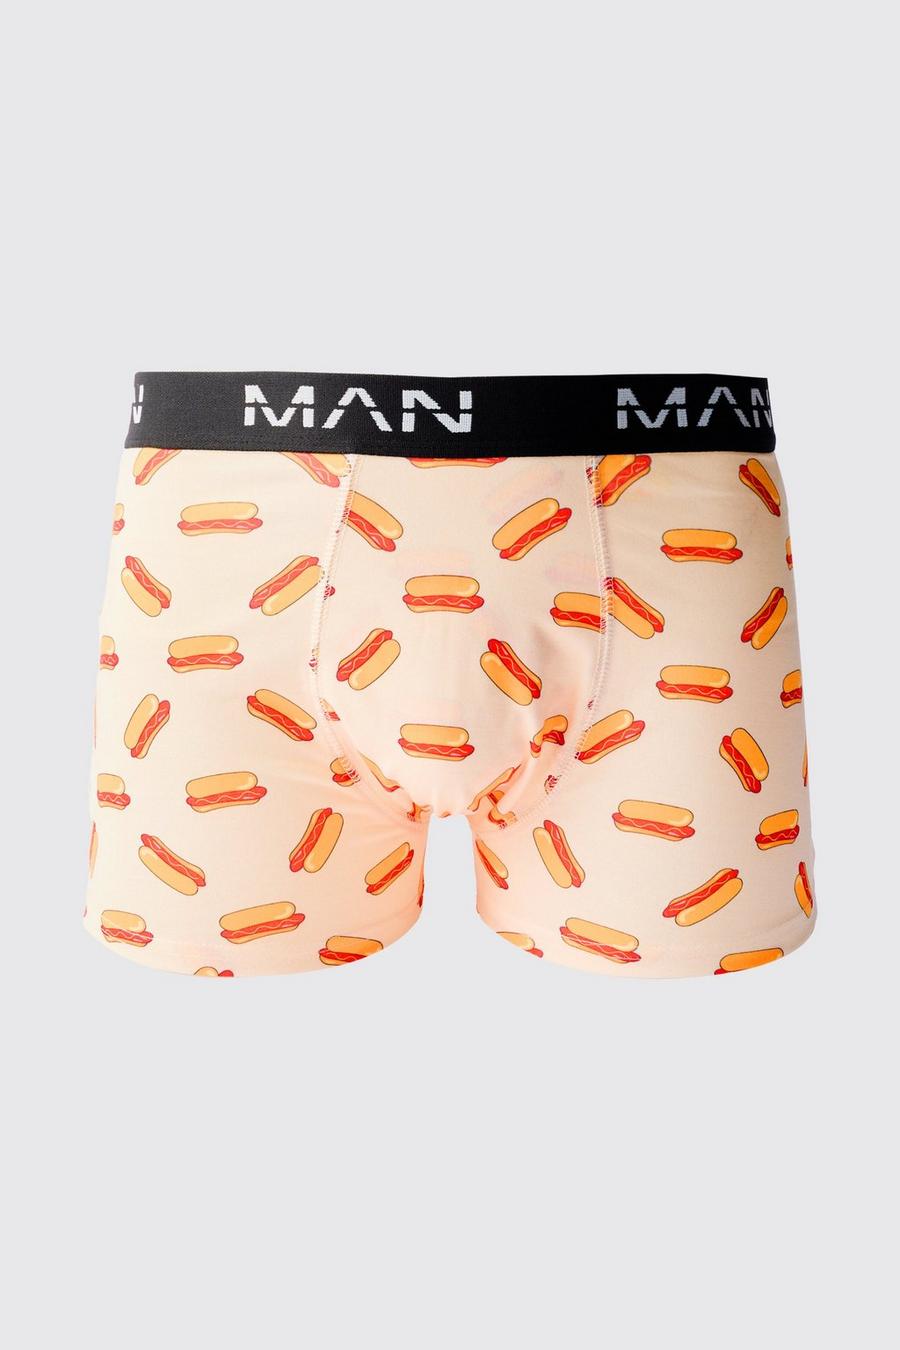 Multi Man Hot Dog Printed Boxers